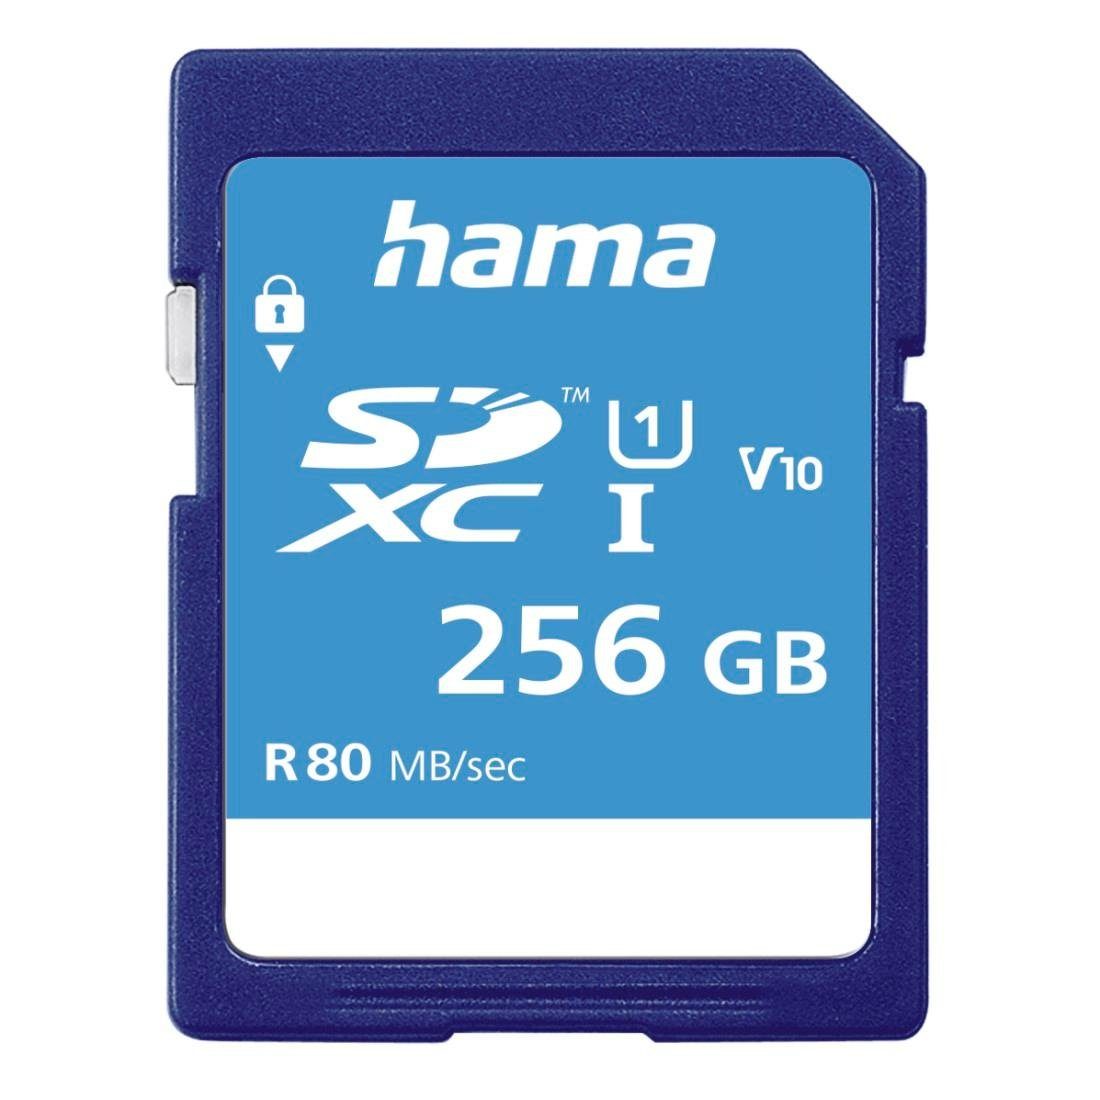 Hama SDHC 16GB Class 10 UHS-I 80MB/S Speicherkarte (256 GB, UHS-I Class 10)